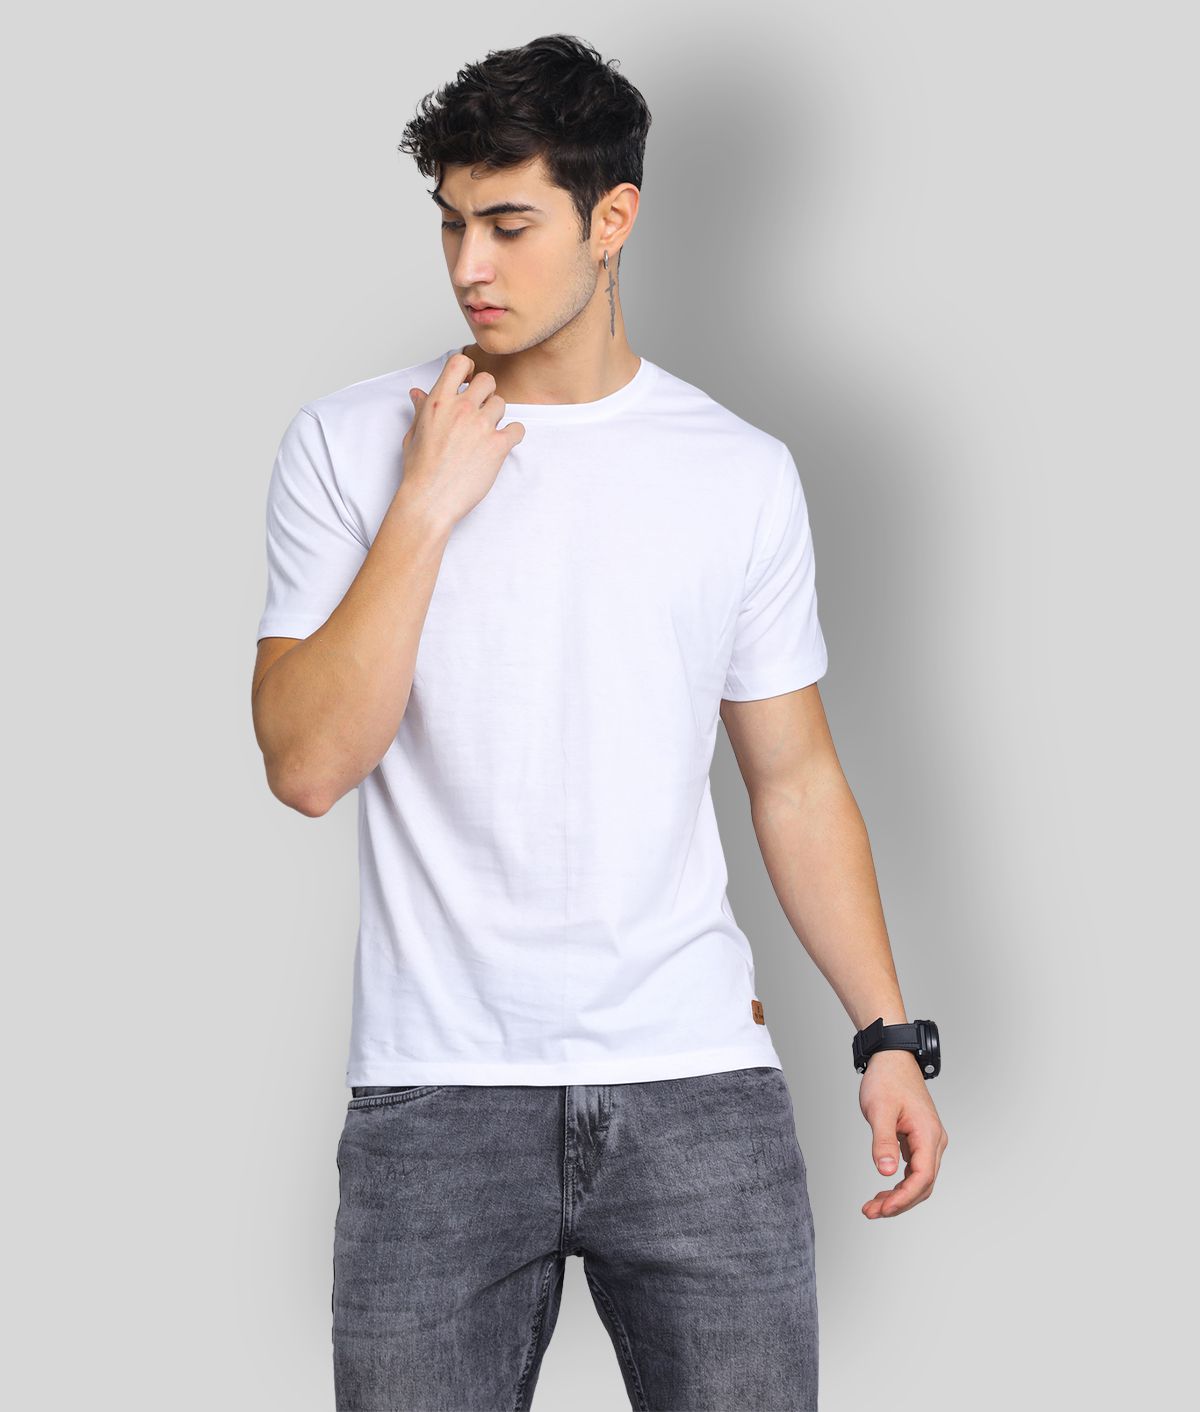     			Paul Street - White Cotton Blend Slim Fit  Men's T-Shirt ( Pack of 1 )